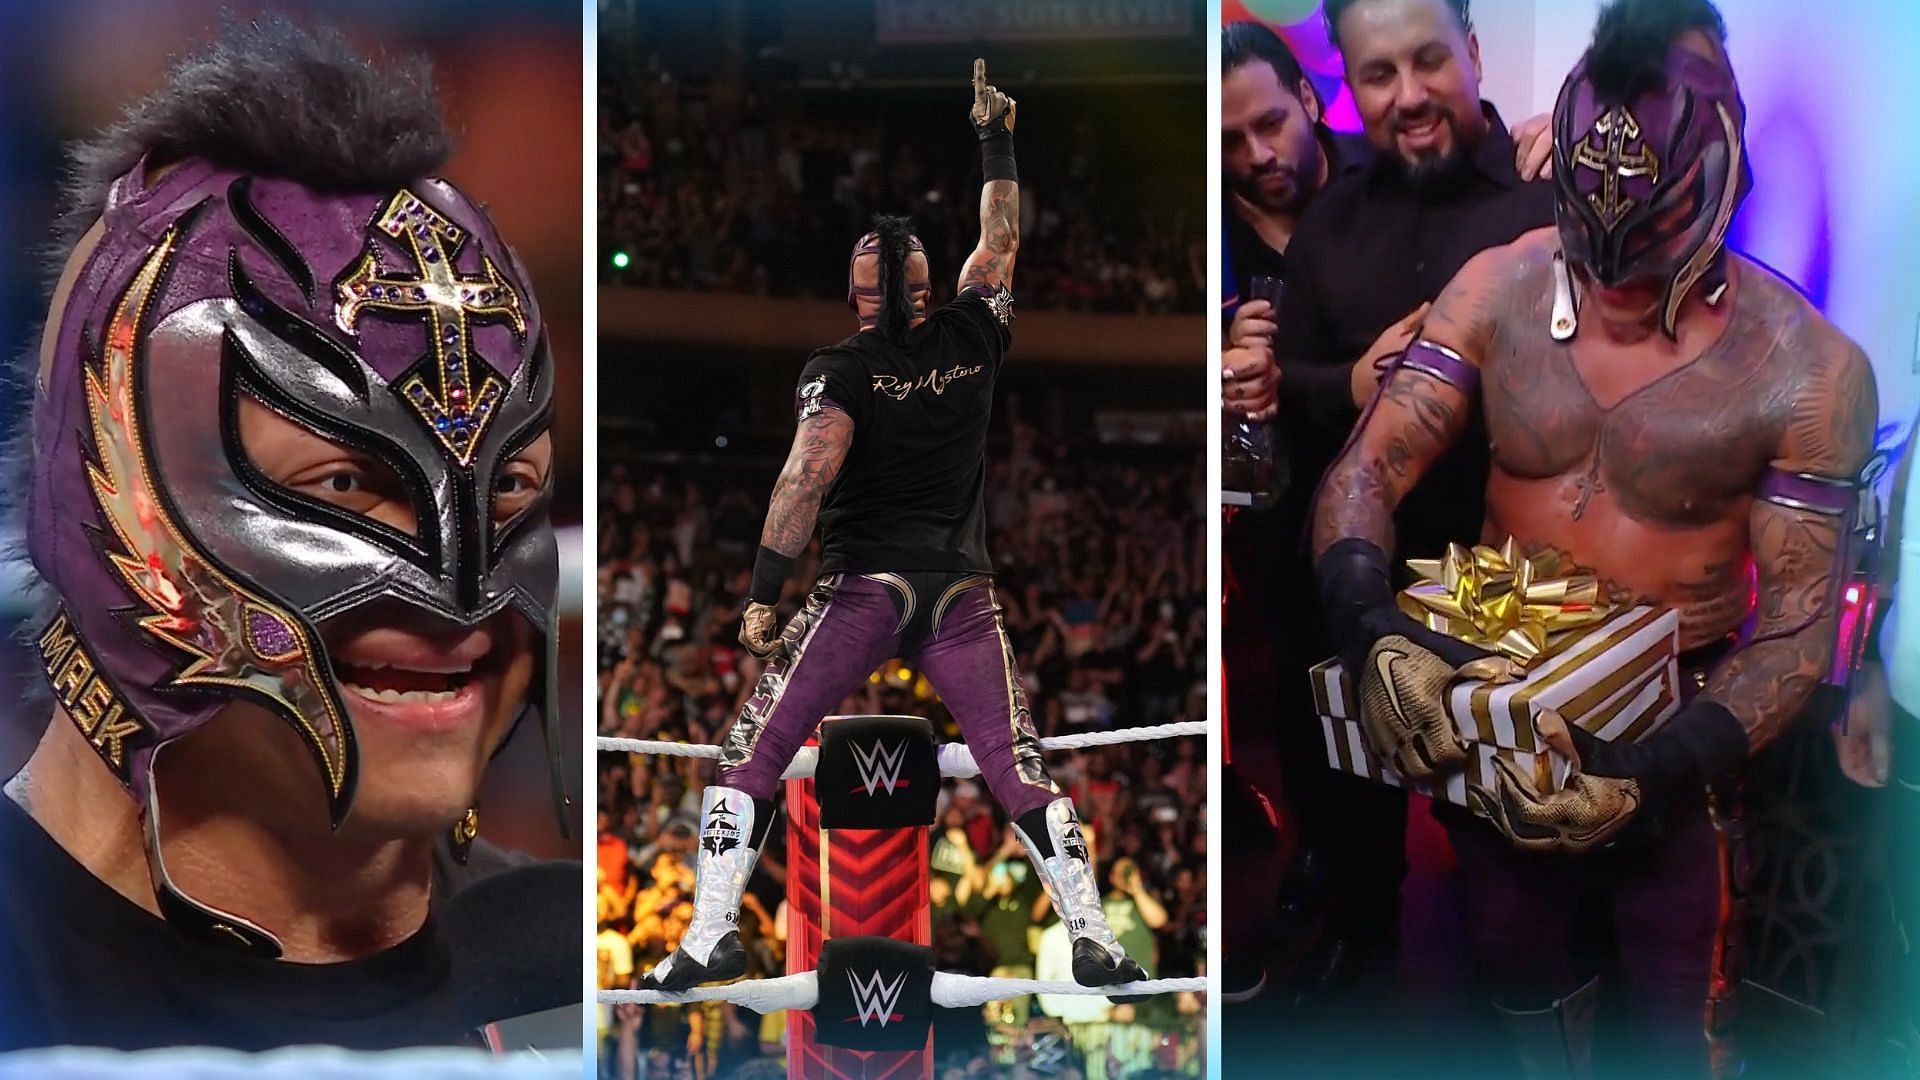 Rey Mysterio has had an illustrious career in WWE